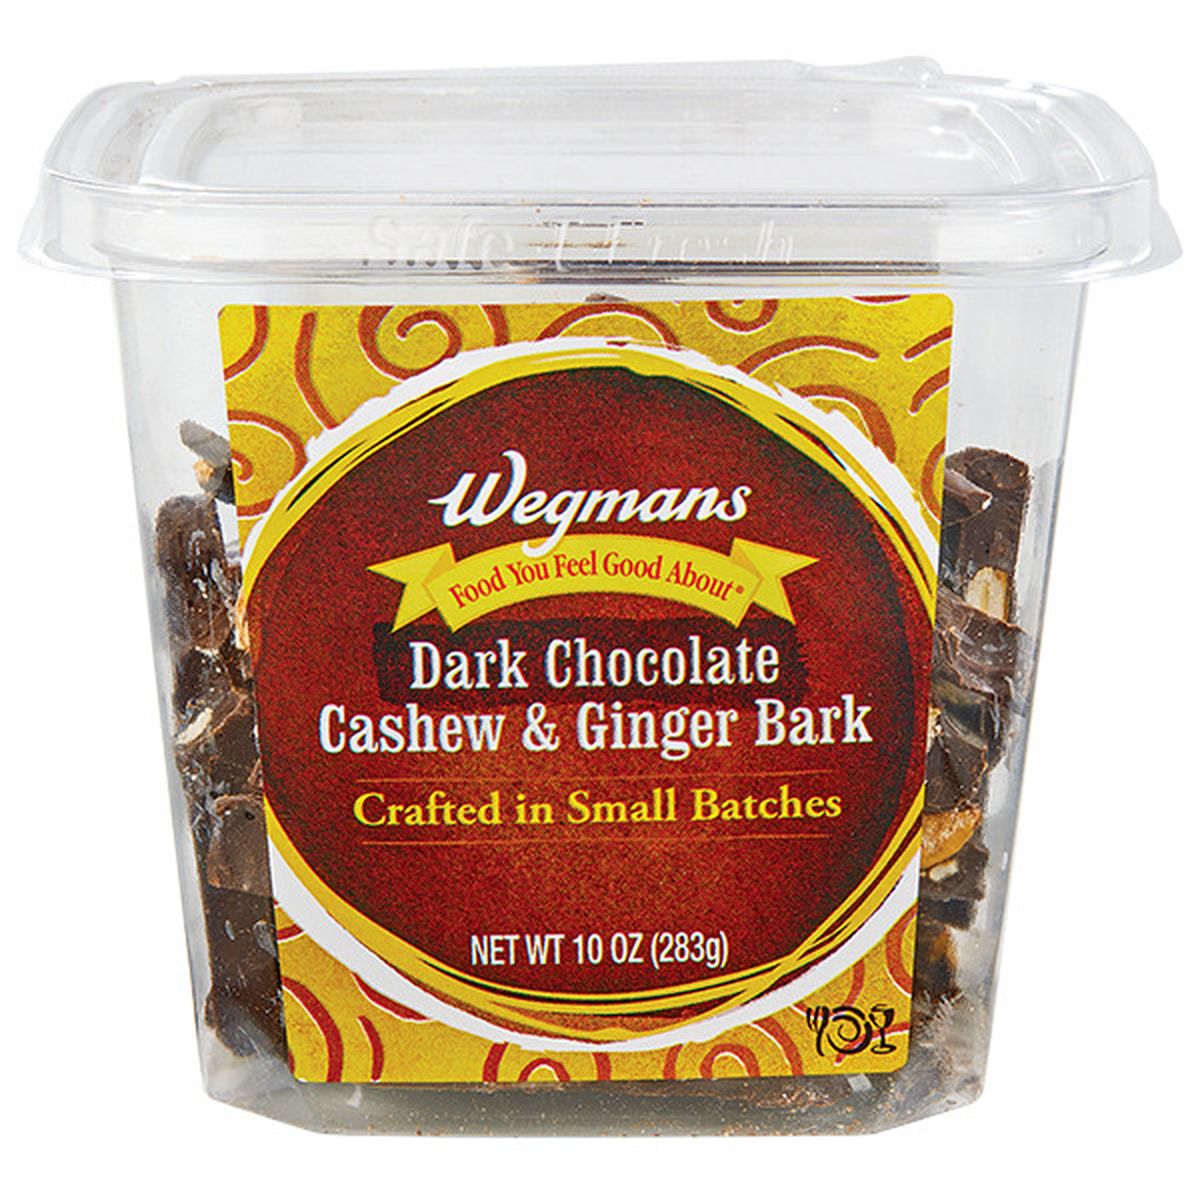 Calories in Wegmans Dark Chocolate Cashew & Ginger Bark